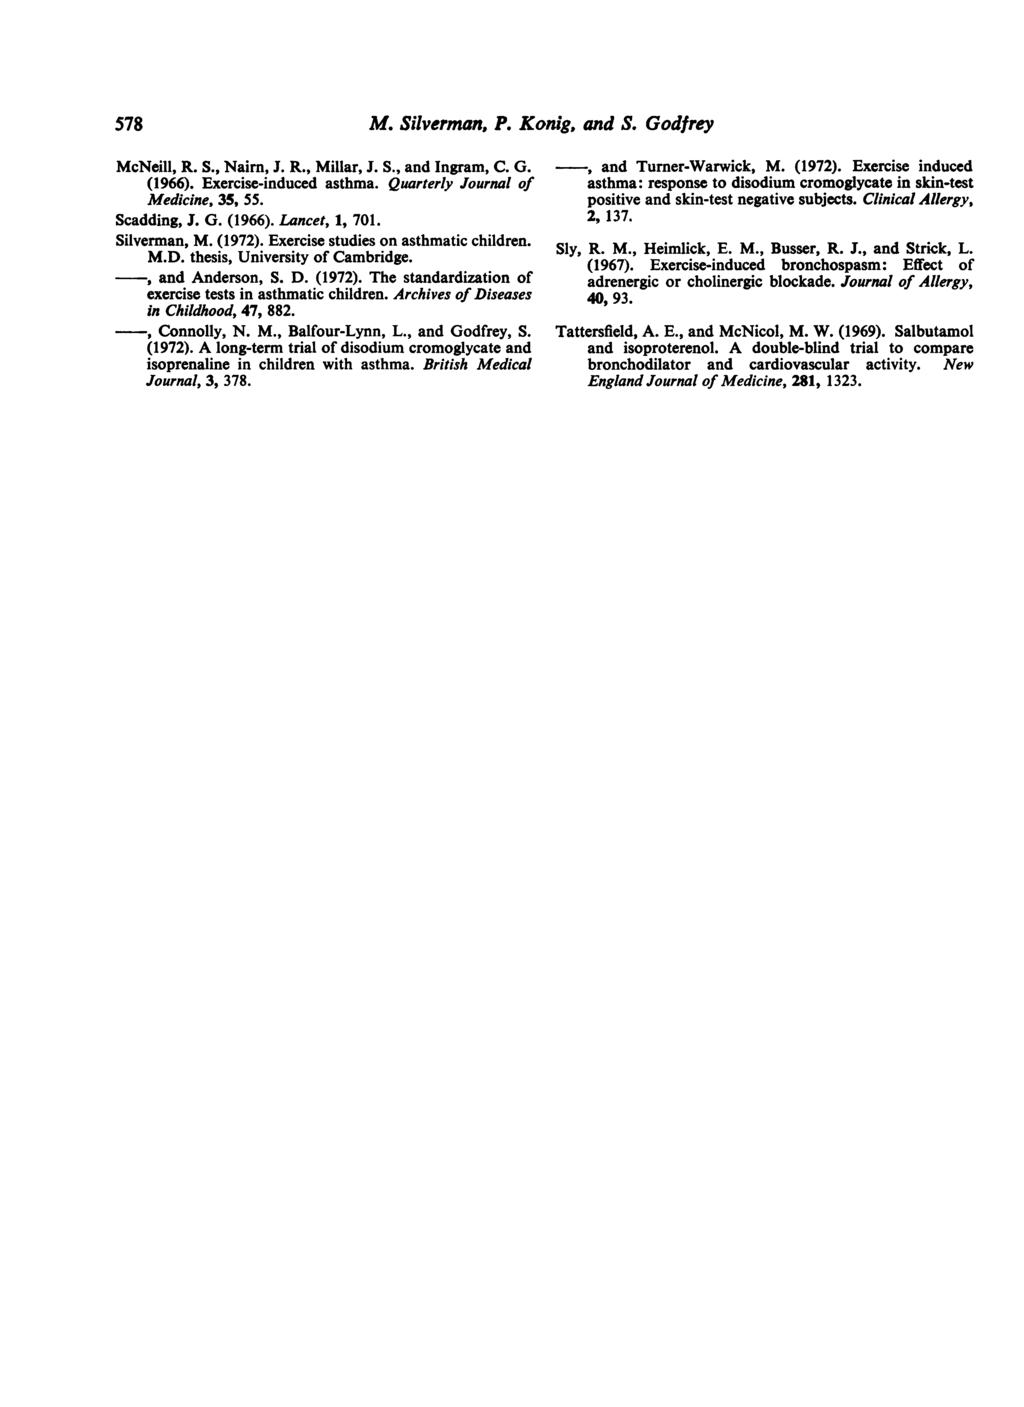 578 McNeill, R. S., Nairn, J. R., Millar, J. S., and Ingram, C. G. (1966). Exercise-induced asthma. Quarterly Journal of Medicine, 35, 55. Scadding, J. G. (1966). Lancet, 1, 701. Silverman, M. (1972).